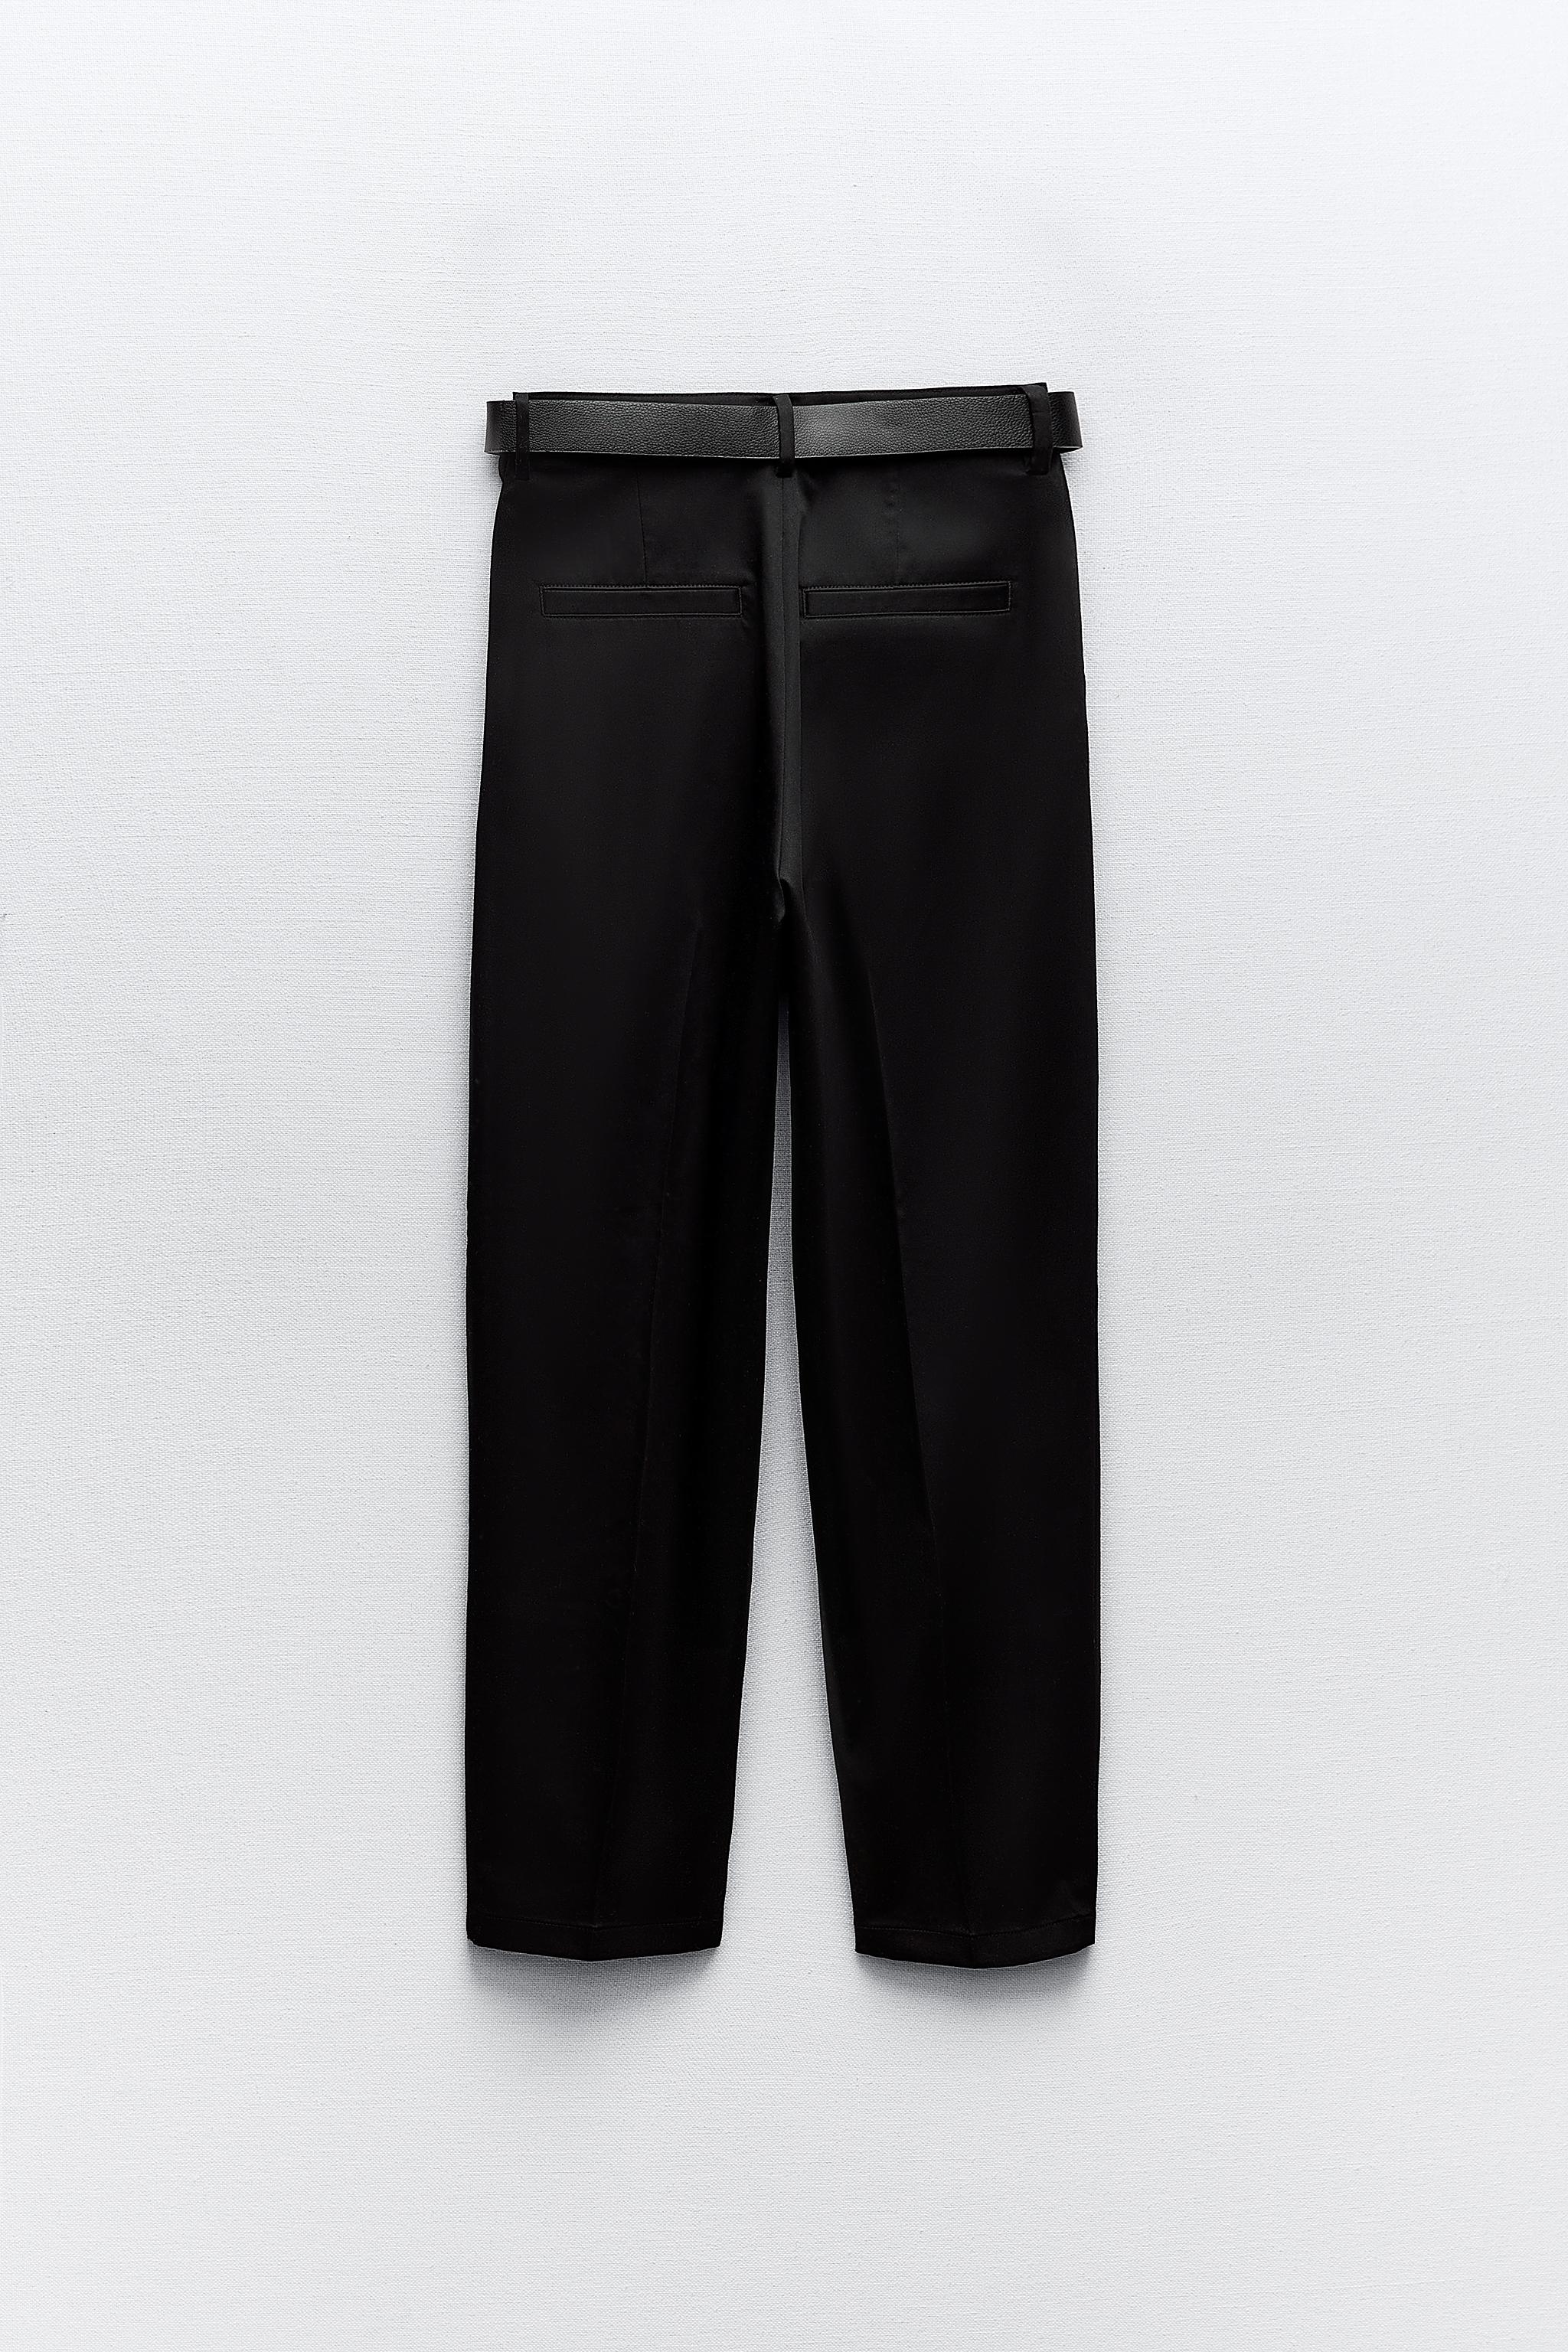 Zara women pants chino slim mid rise 9632/046/710 beige sz US 2